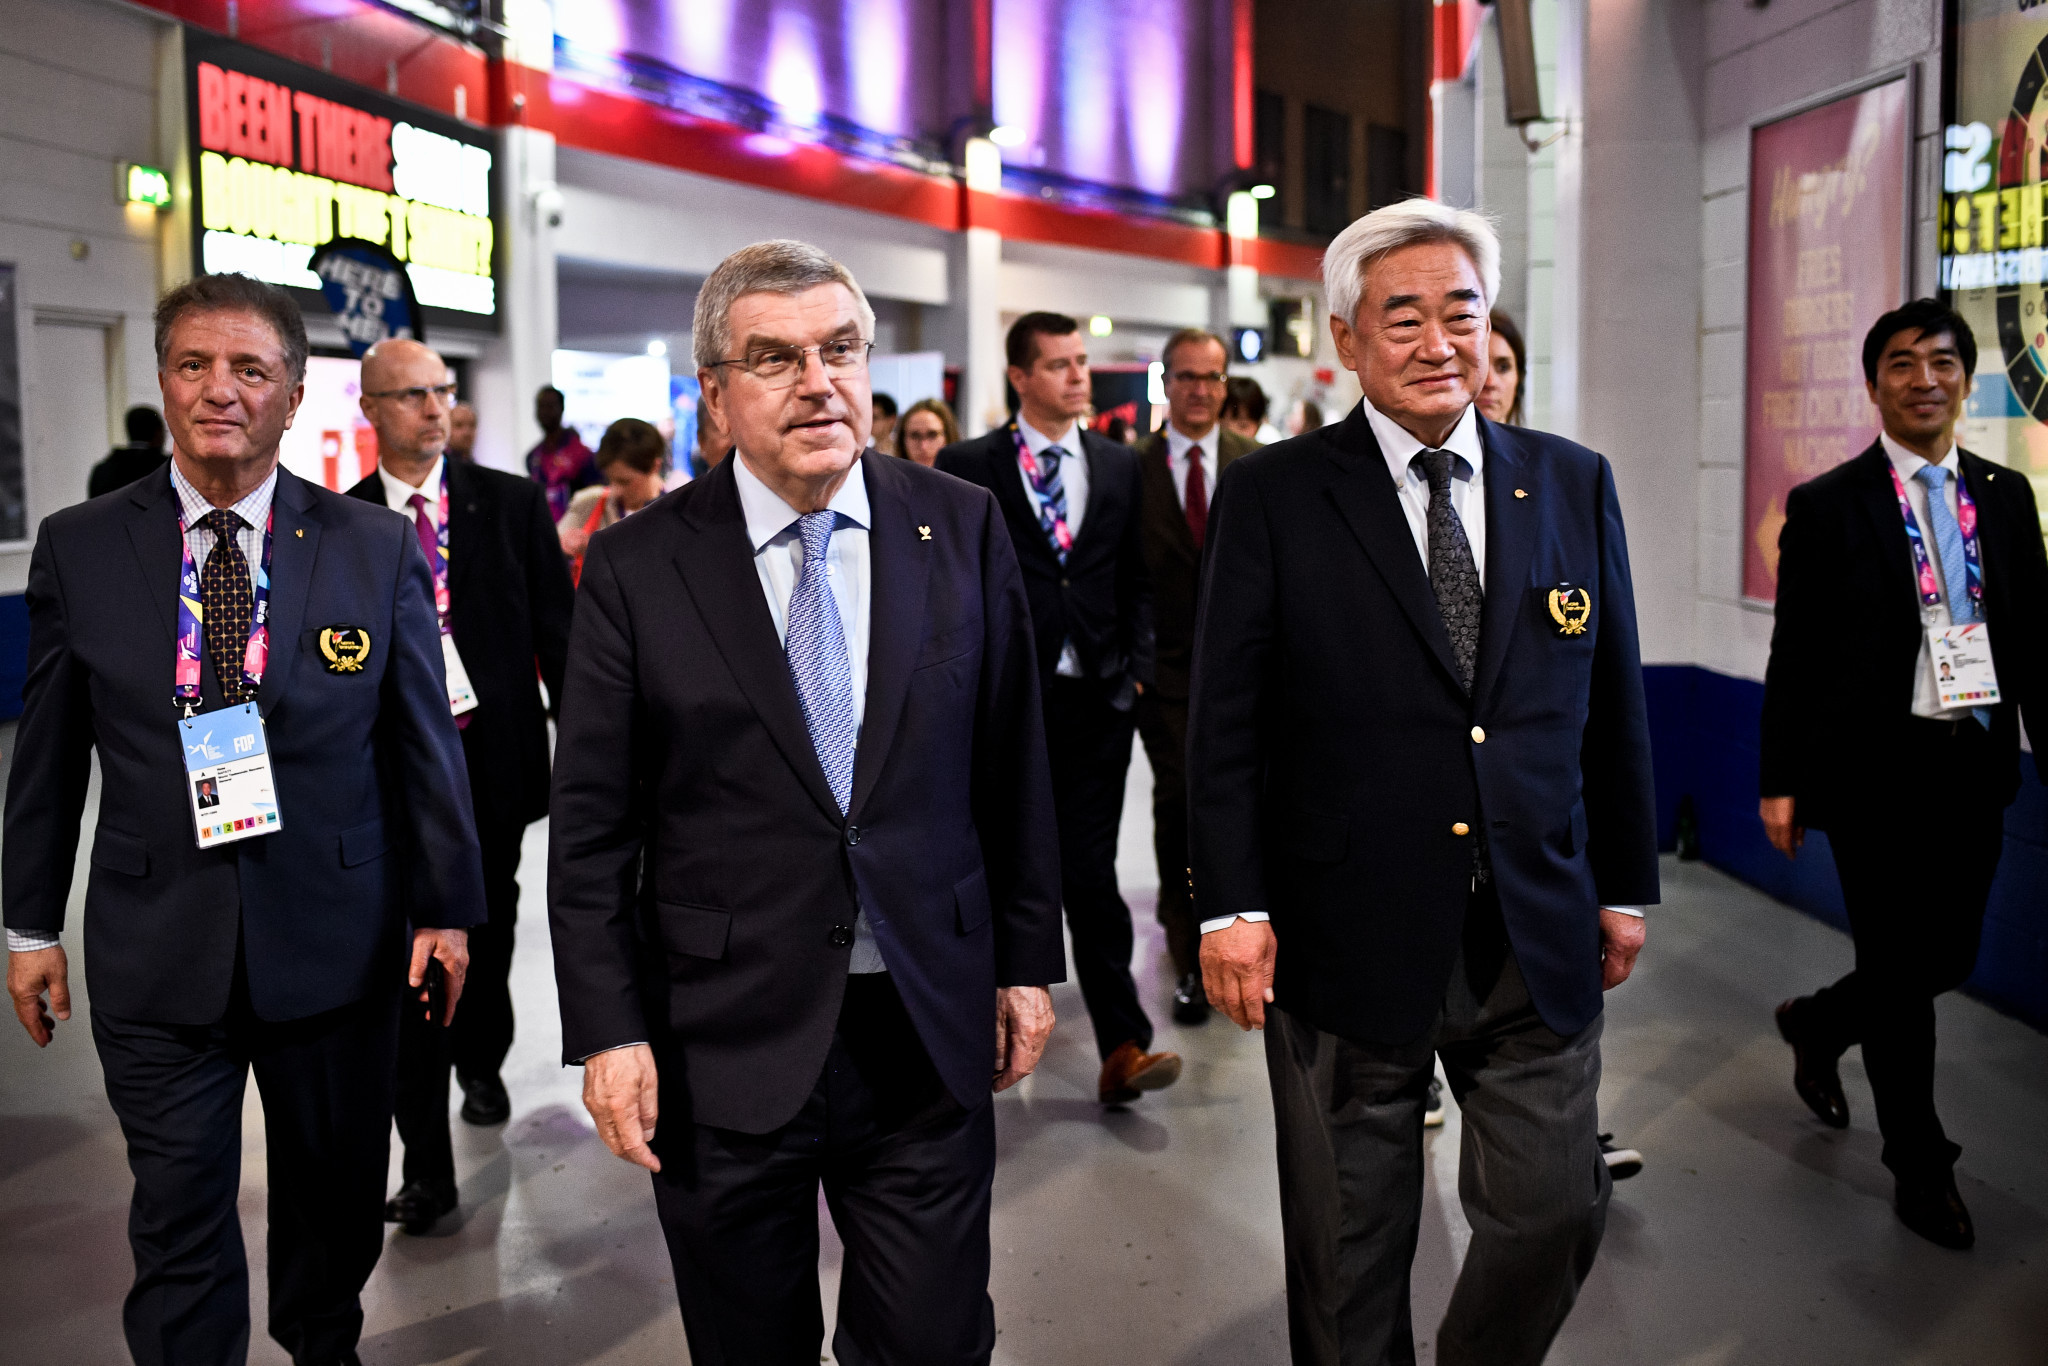 IOC President Bach visits on penultimate day of World Taekwondo Championships